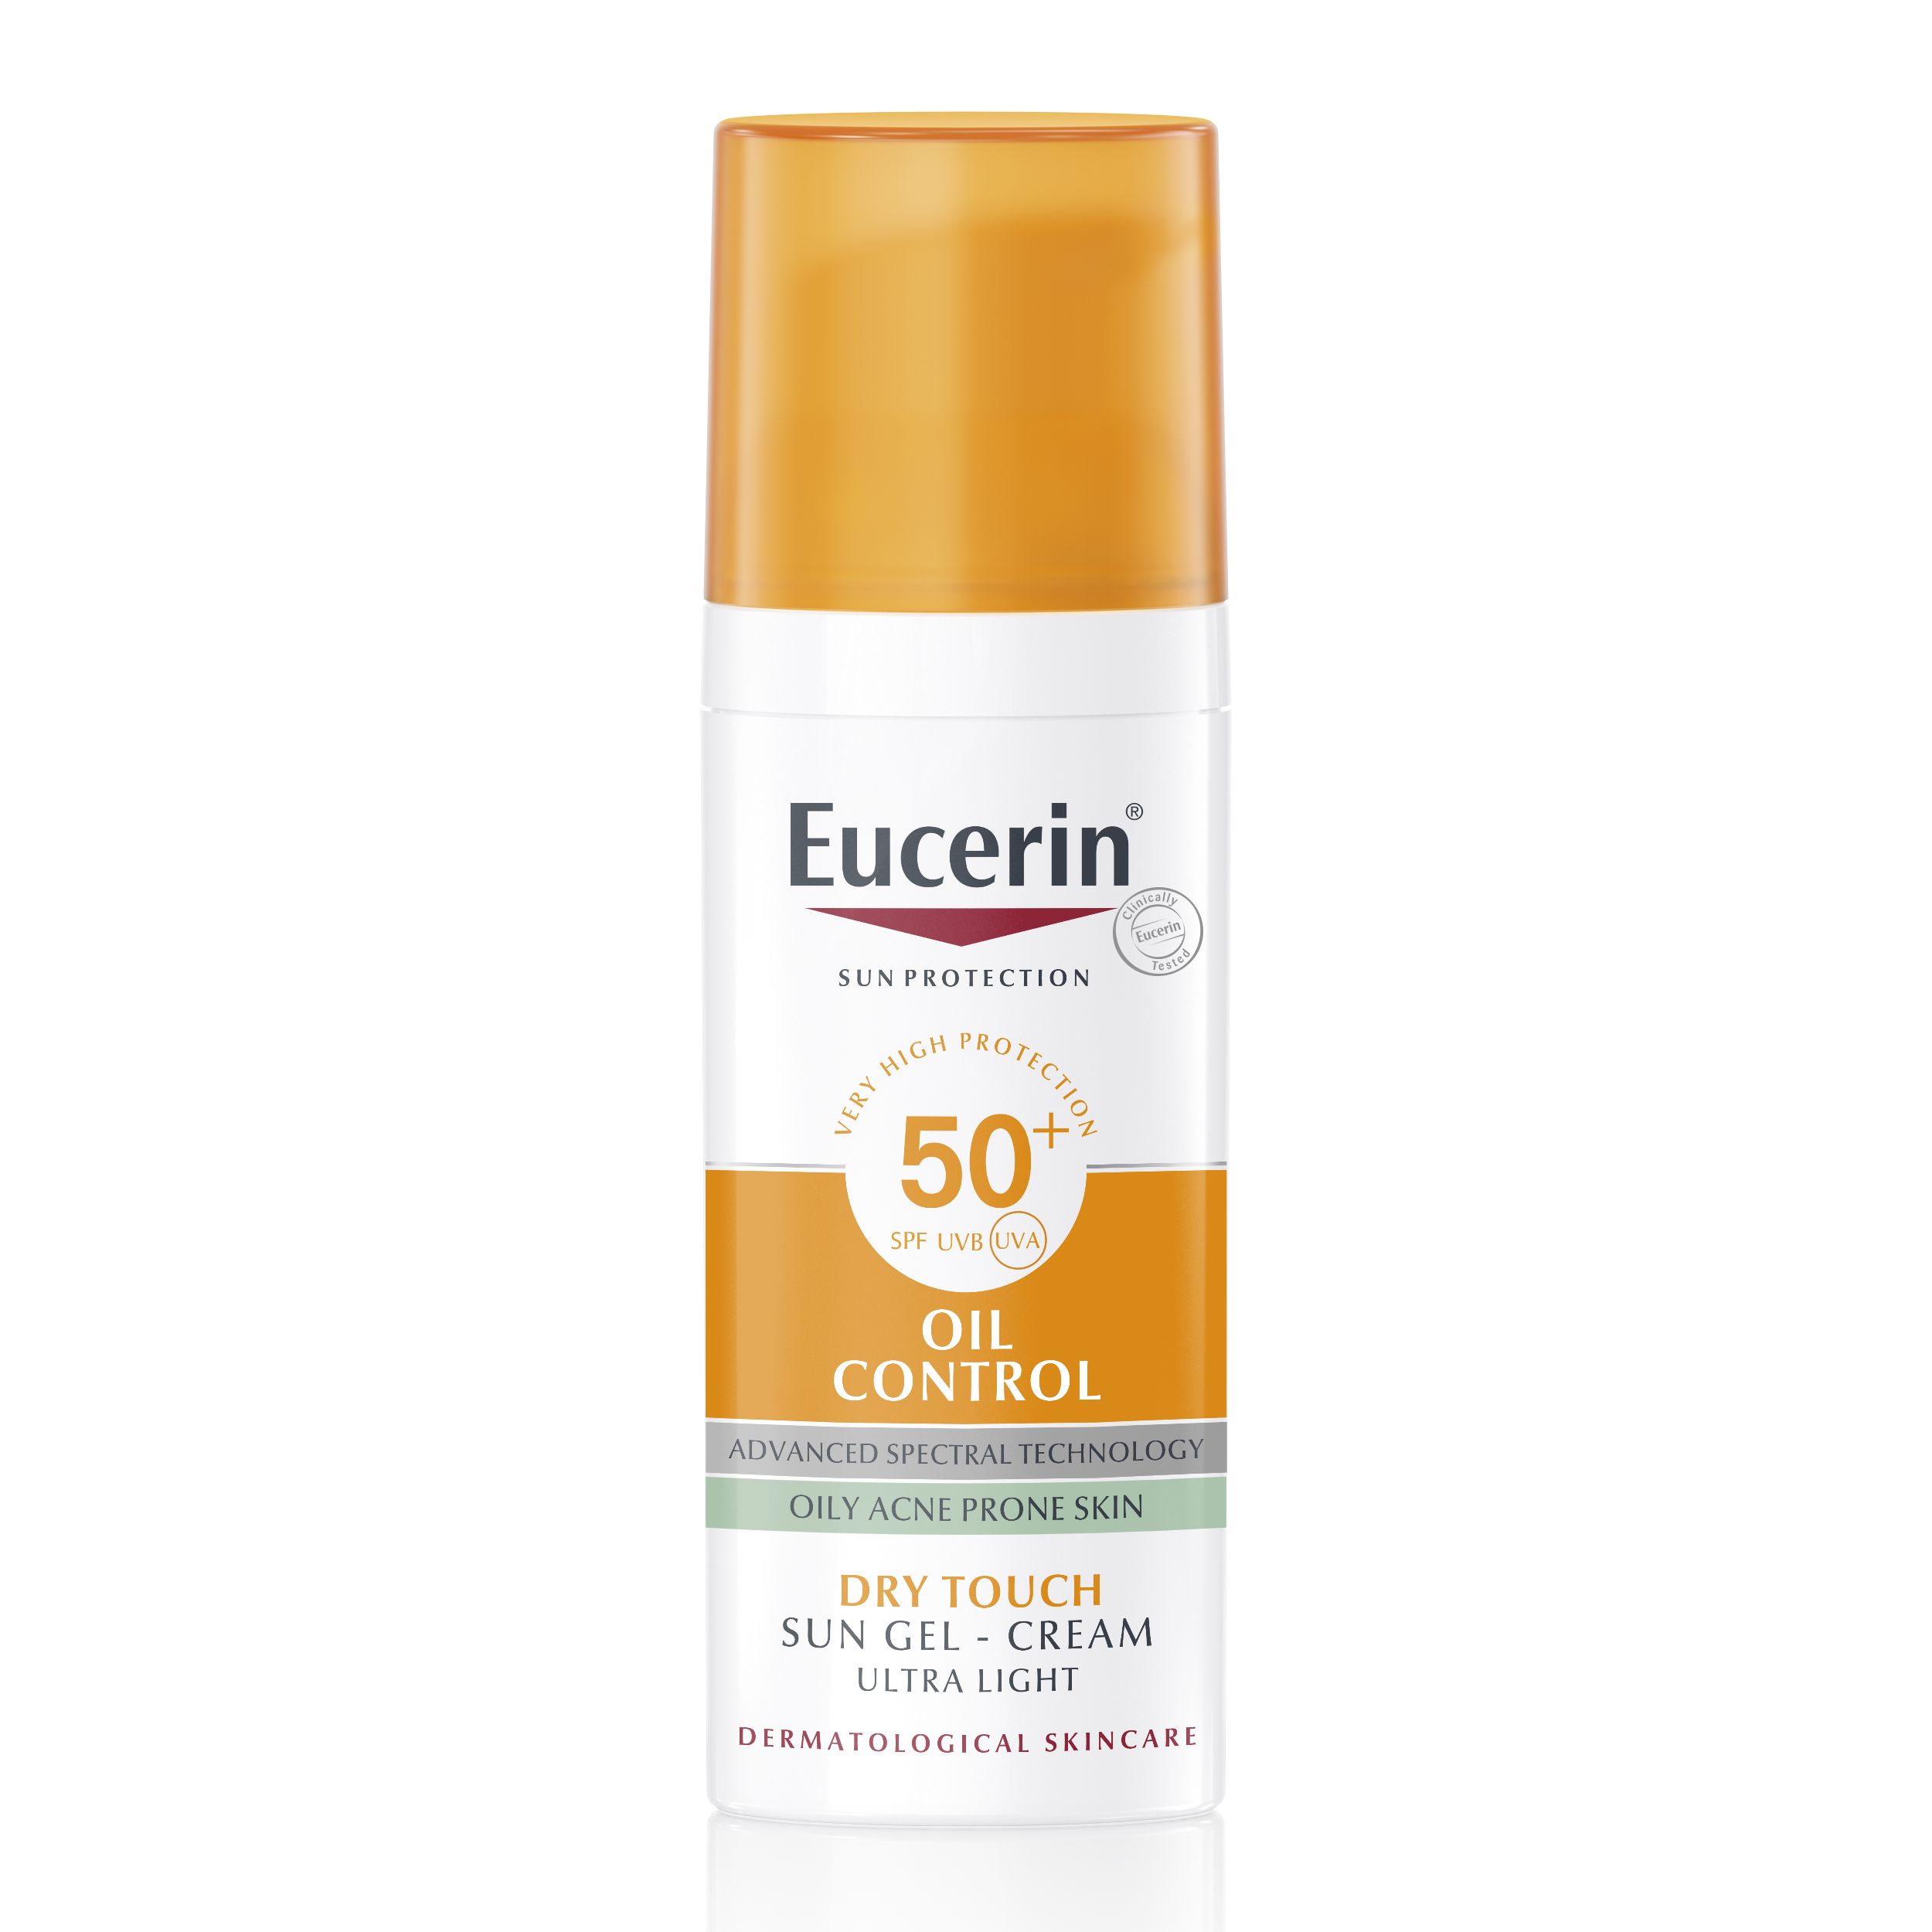 Eucerin Sun Dry Touch Oil Control SPF 50+